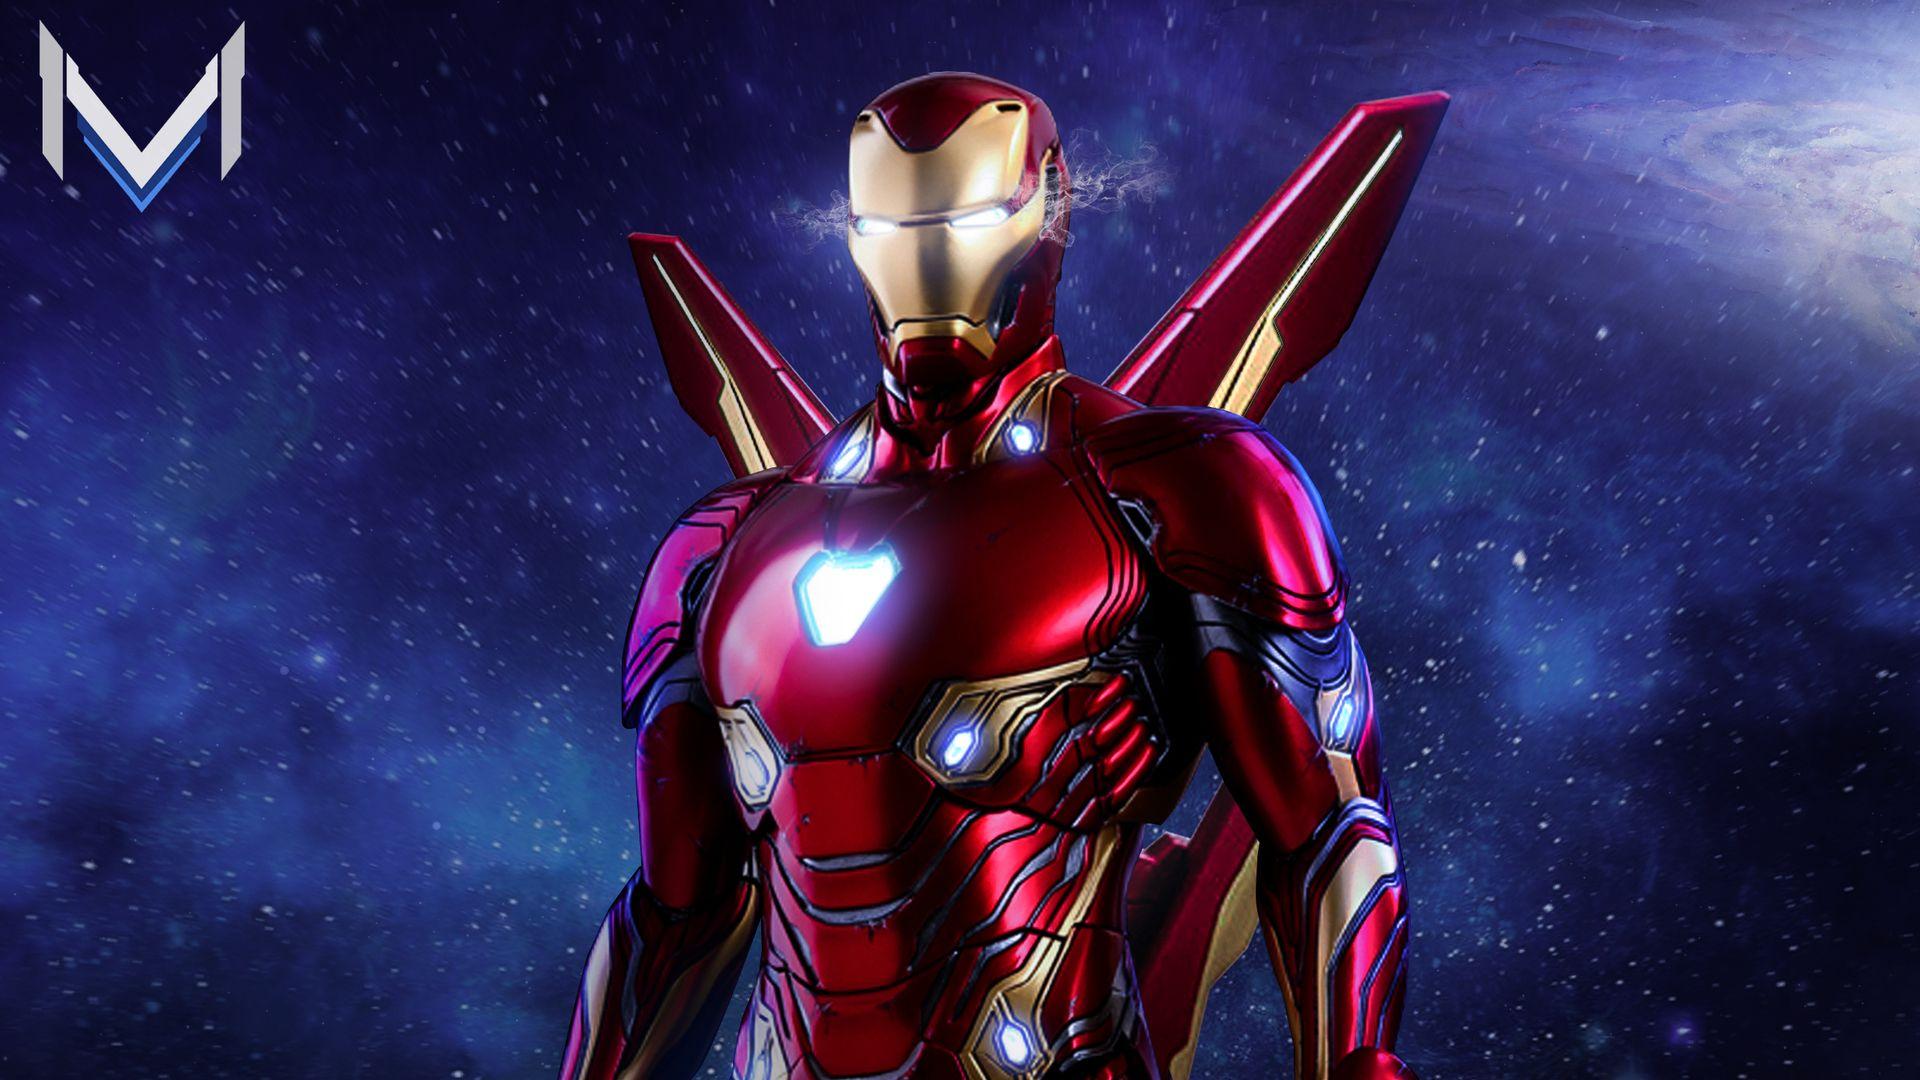 Iron Man Avengers Infinity War Suit Artwork Laptop Full HD